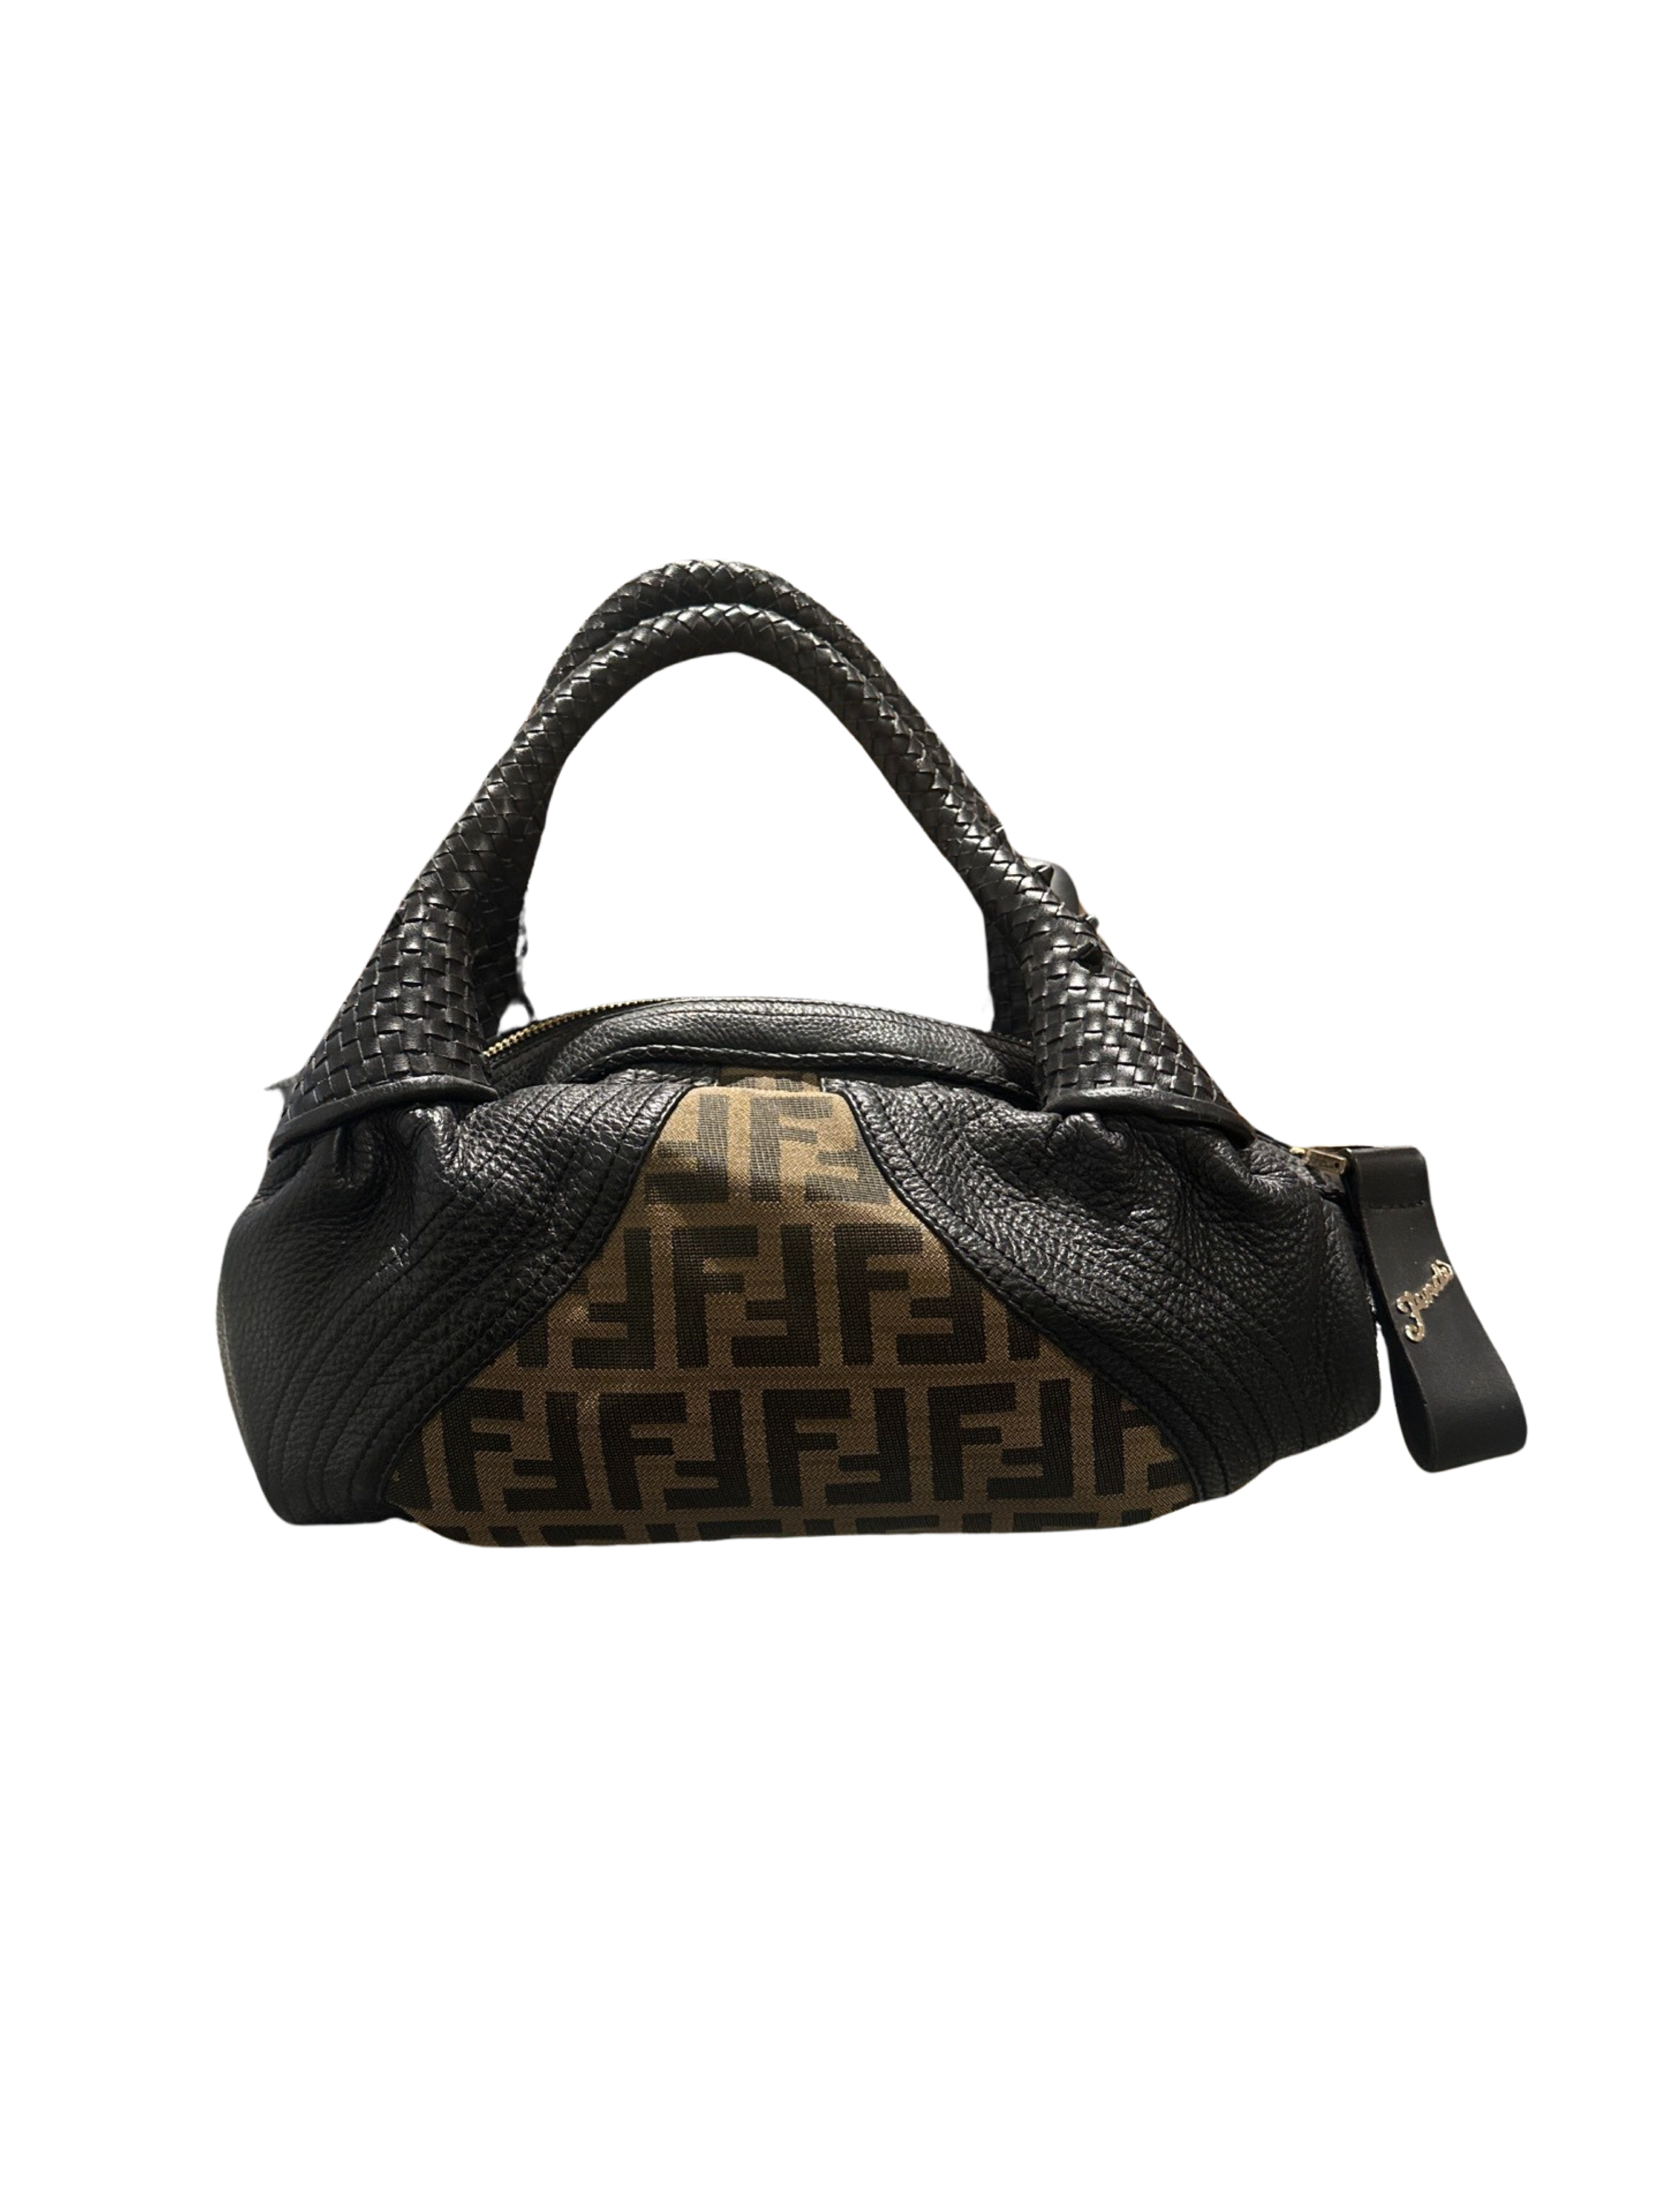 Fendi Black Leather Small Fendi First Shoulder Bag Fendi | TLC